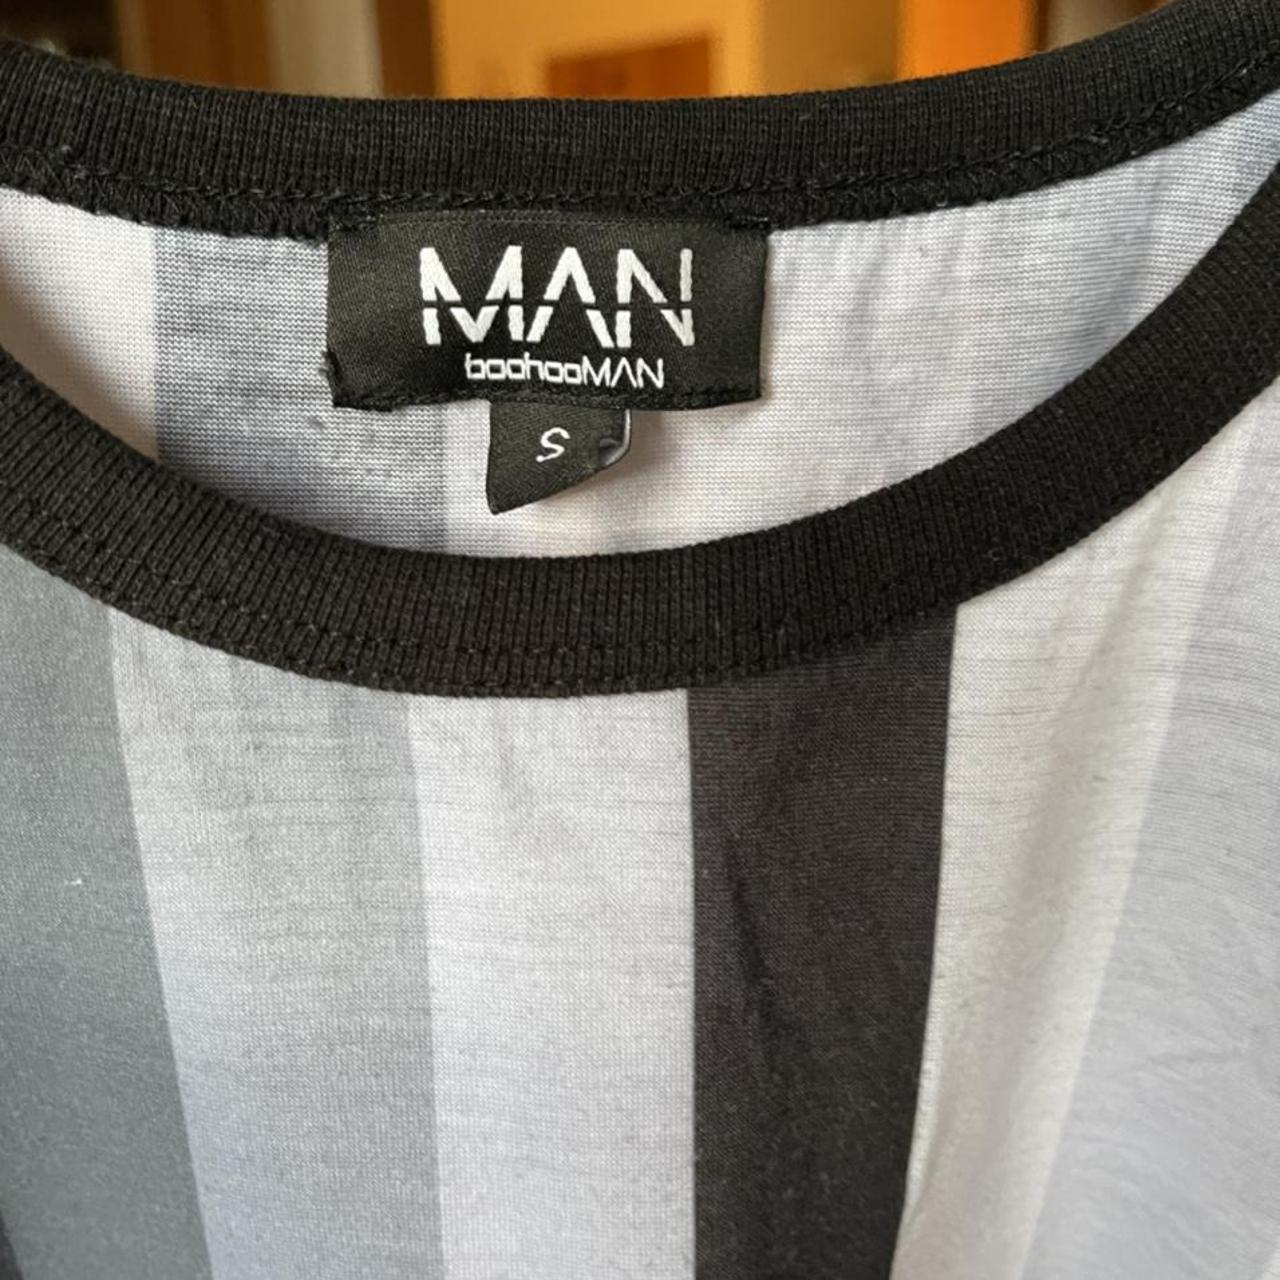 Boohoo Man T-shirt Grey and black Size S (fits... - Depop